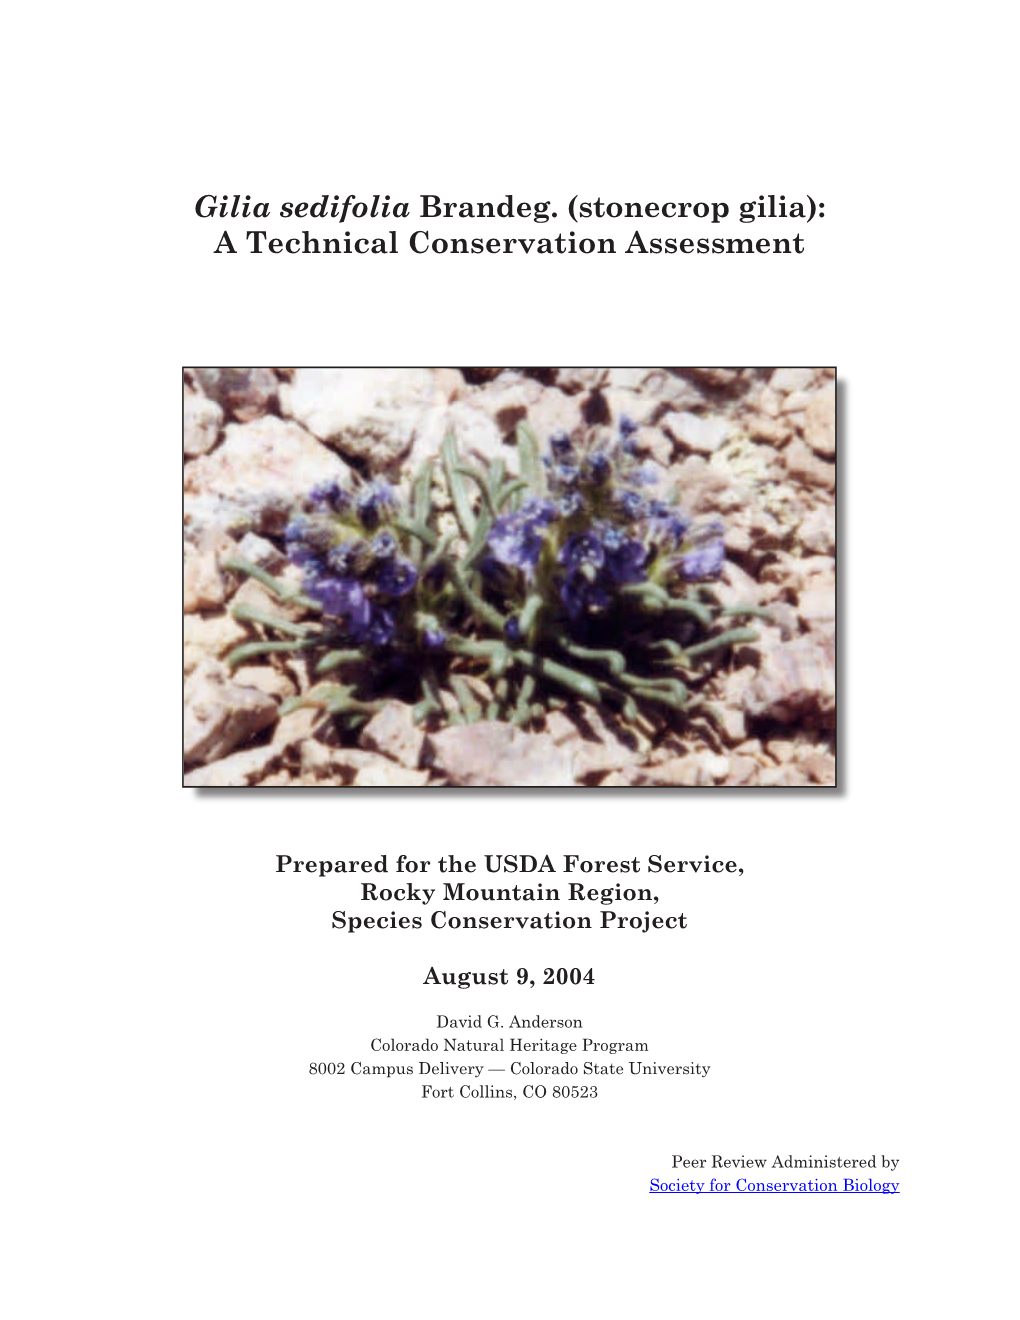 Gilia Sedifolia Brandeg. (Stonecrop Gilia): a Technical Conservation Assessment